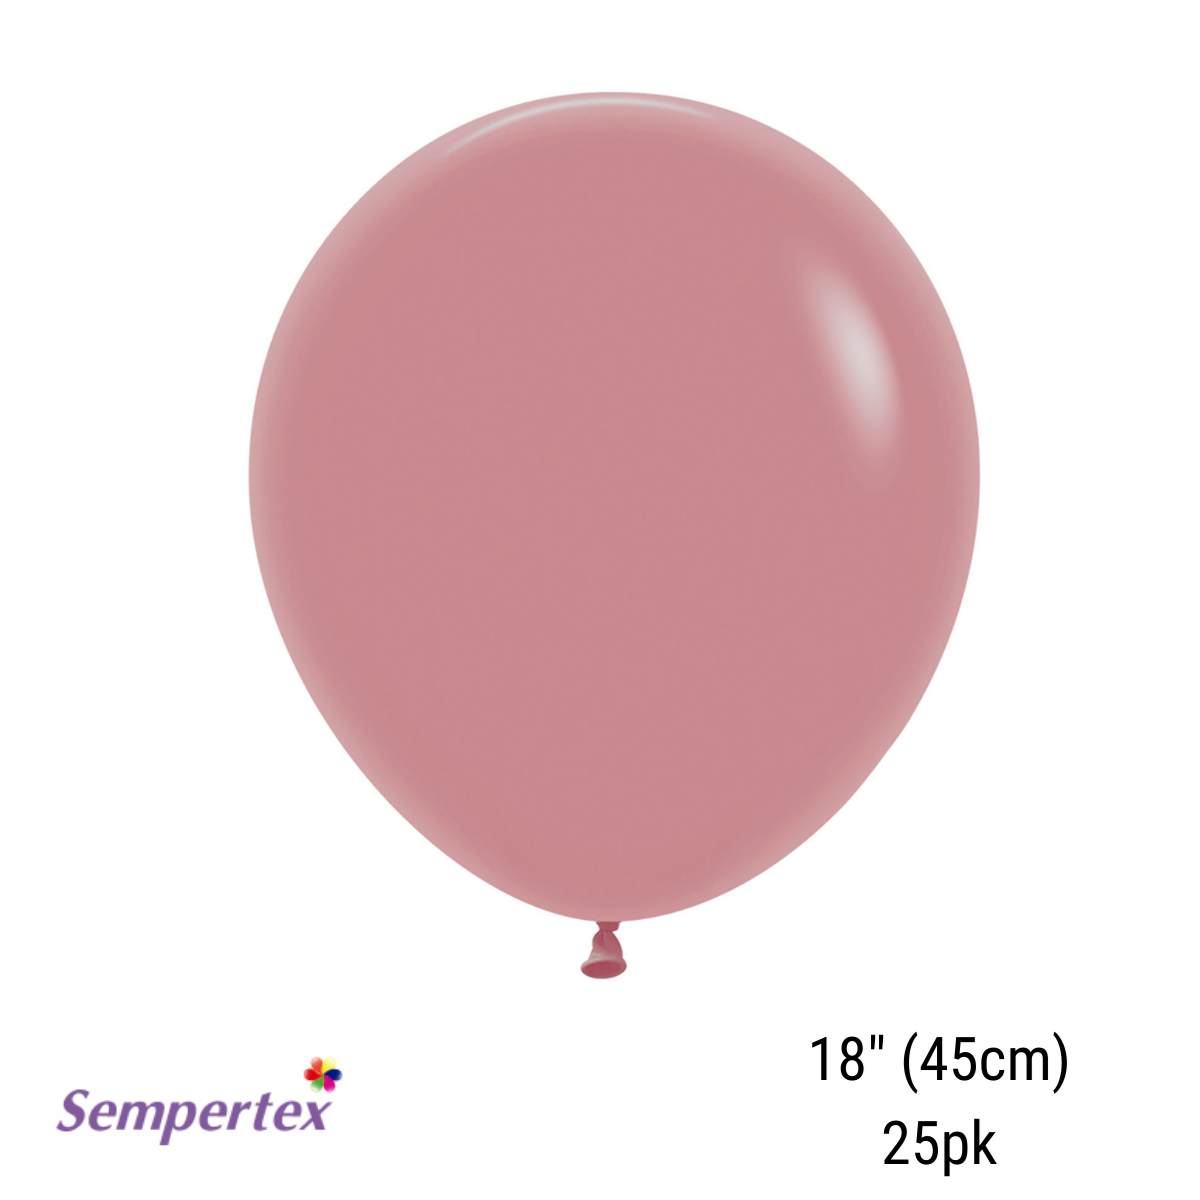 Sempertex Rosewood 18 Latex Balloons 25pk